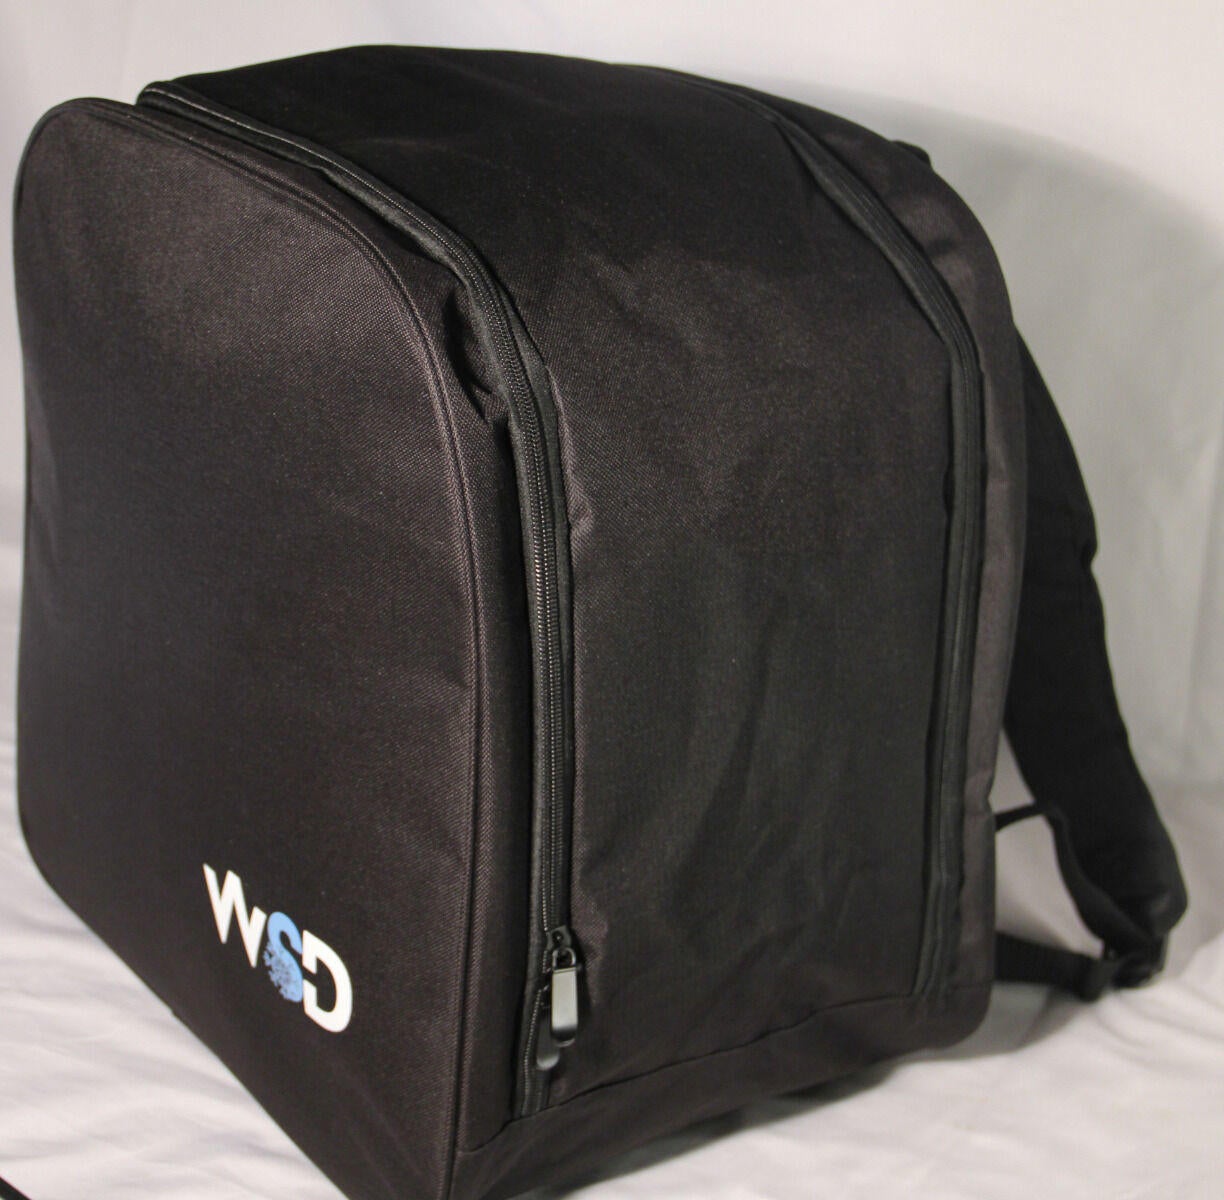 Snowboard bag fully padded snowboard travel bag gray 2019 model New 160cm 